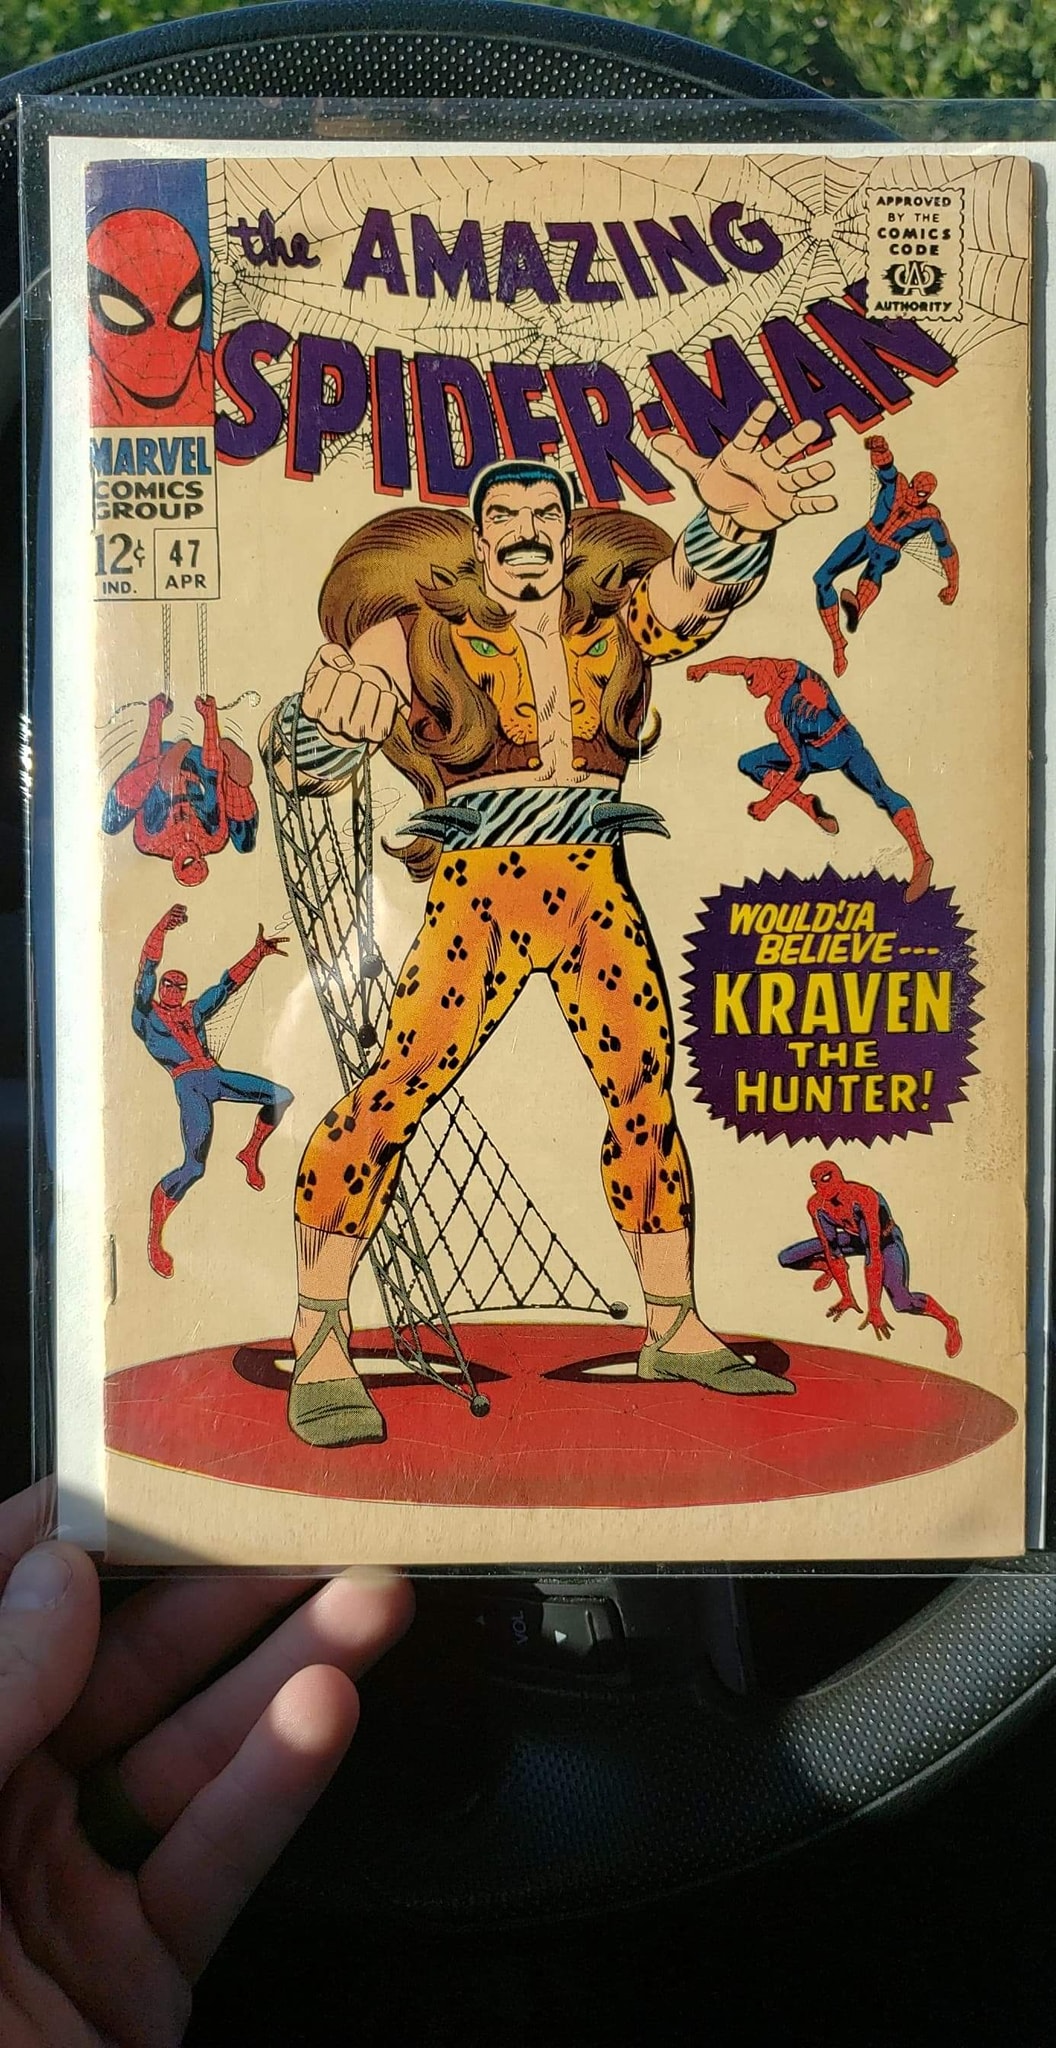 amazing spider-man - the Amazing Gele Kraven Hunter!